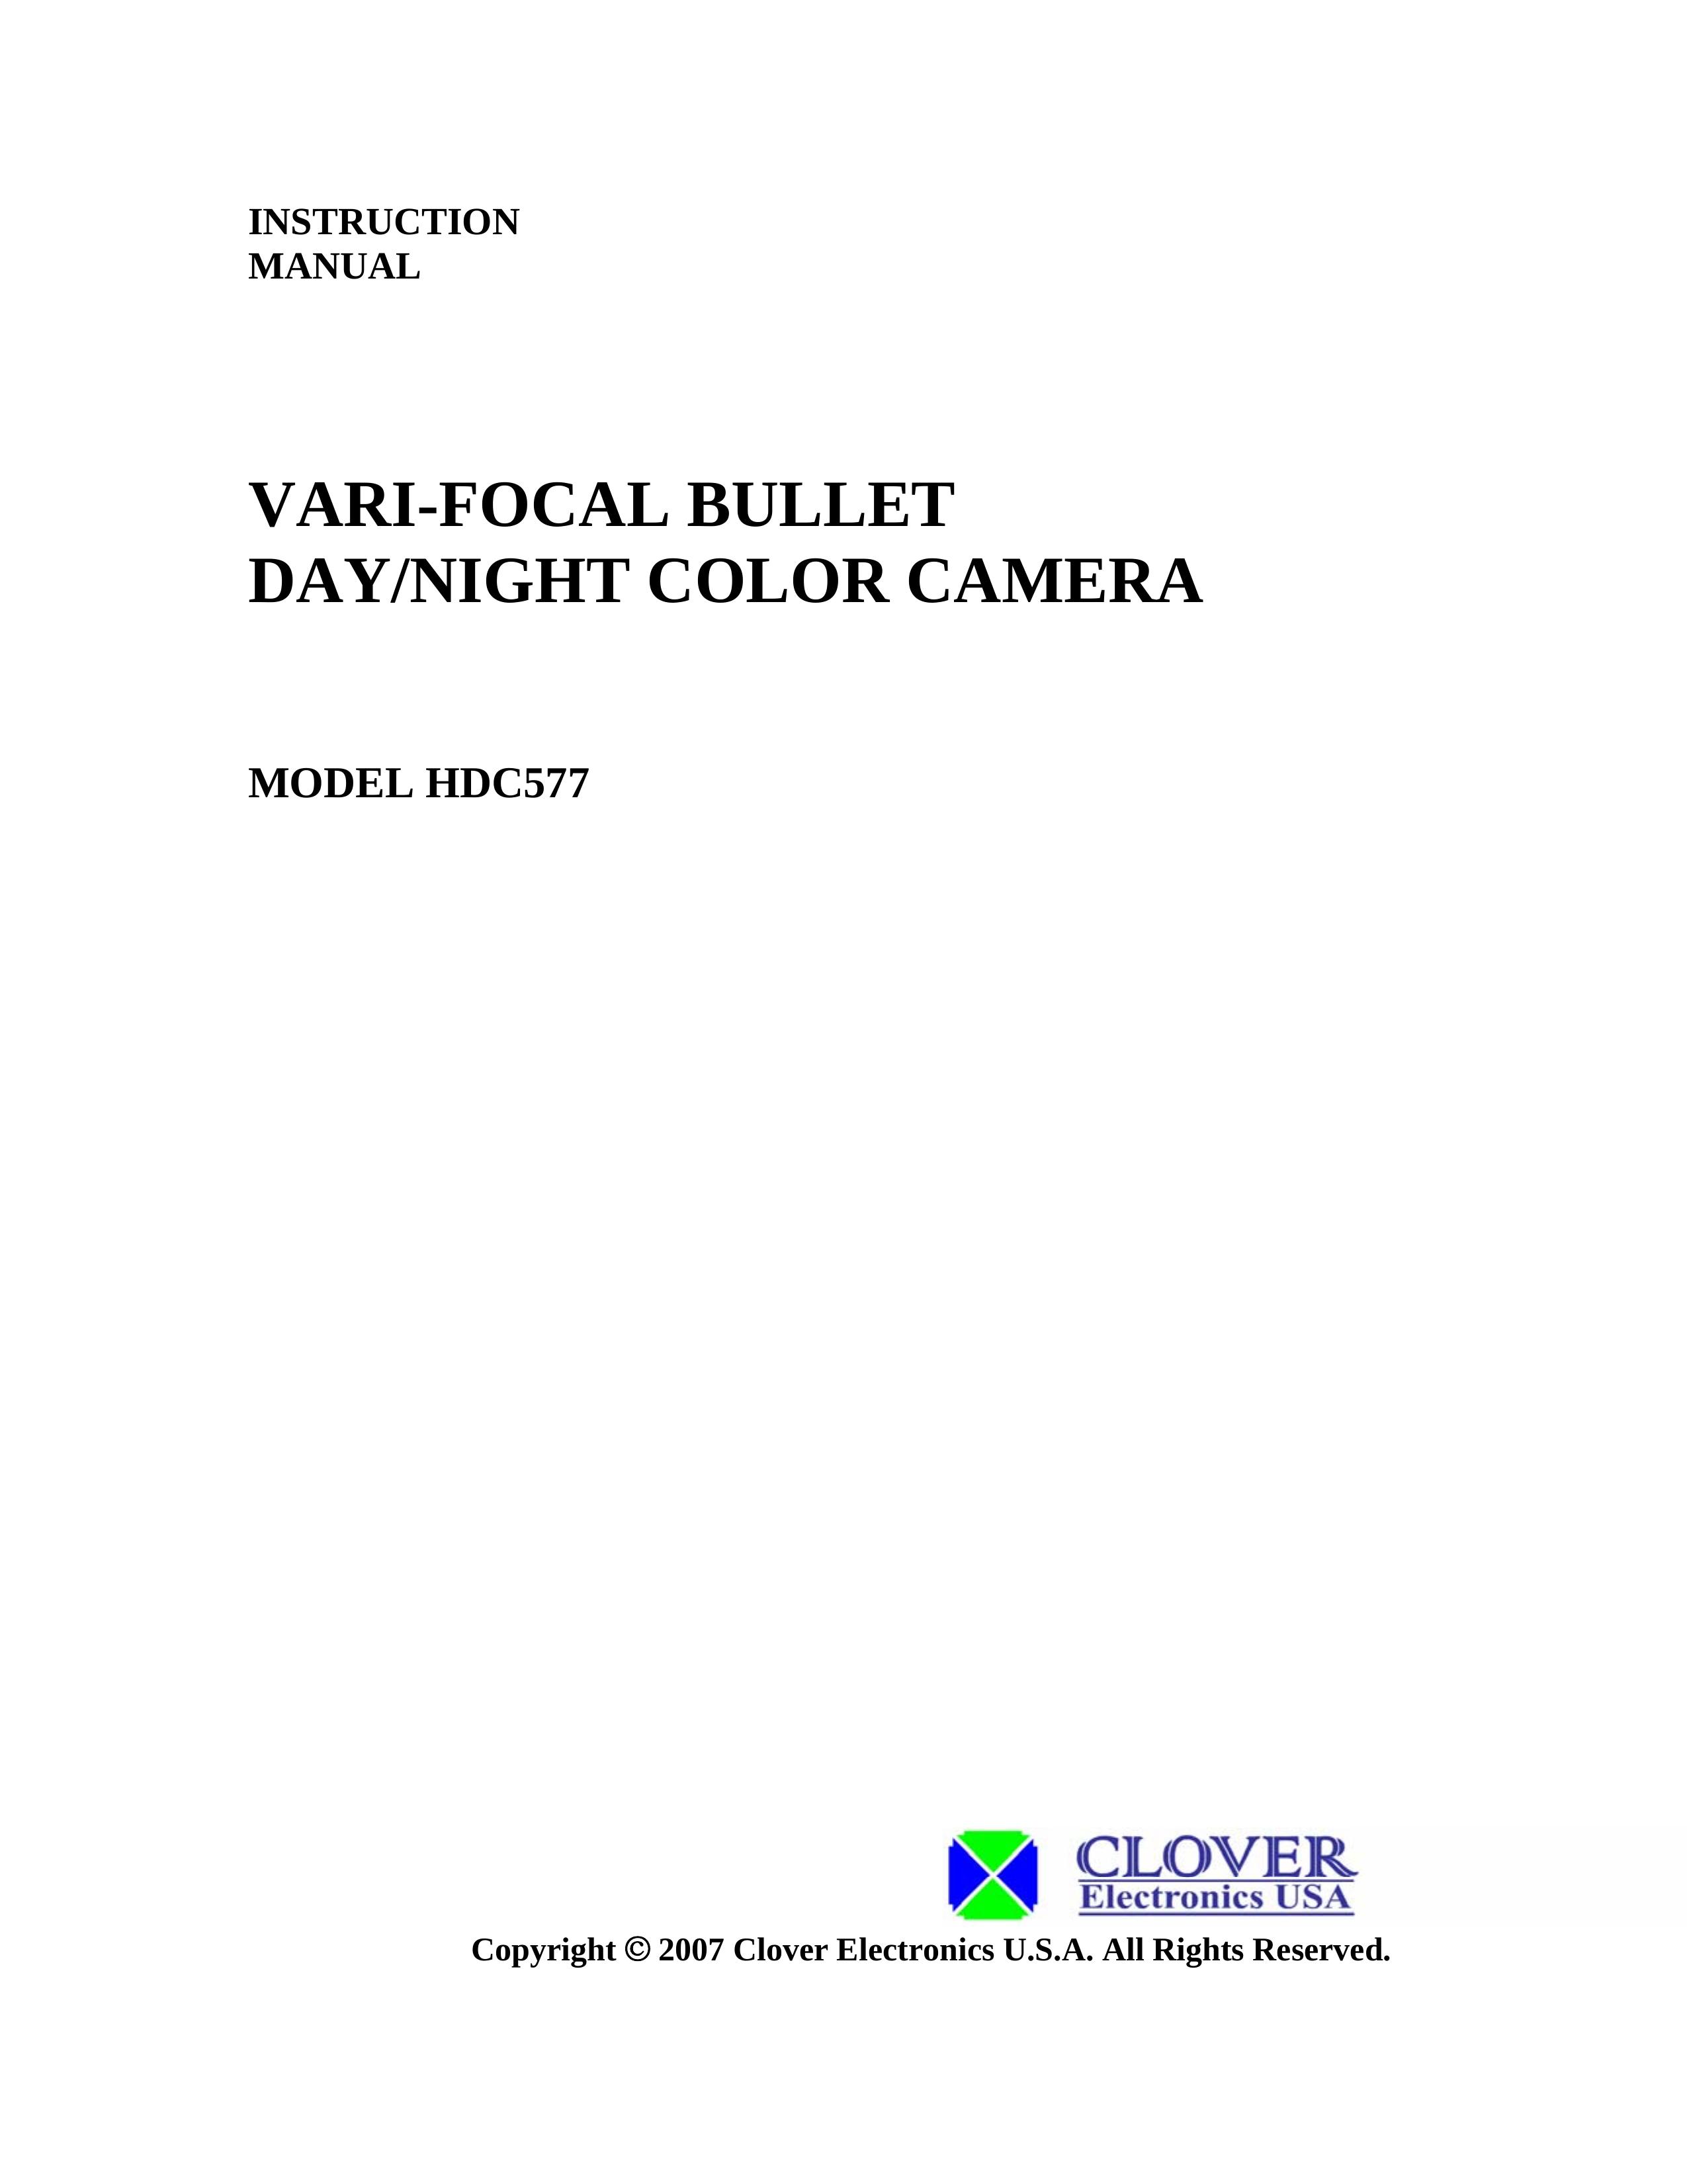 Clover Electronics HDC577 Camcorder User Manual